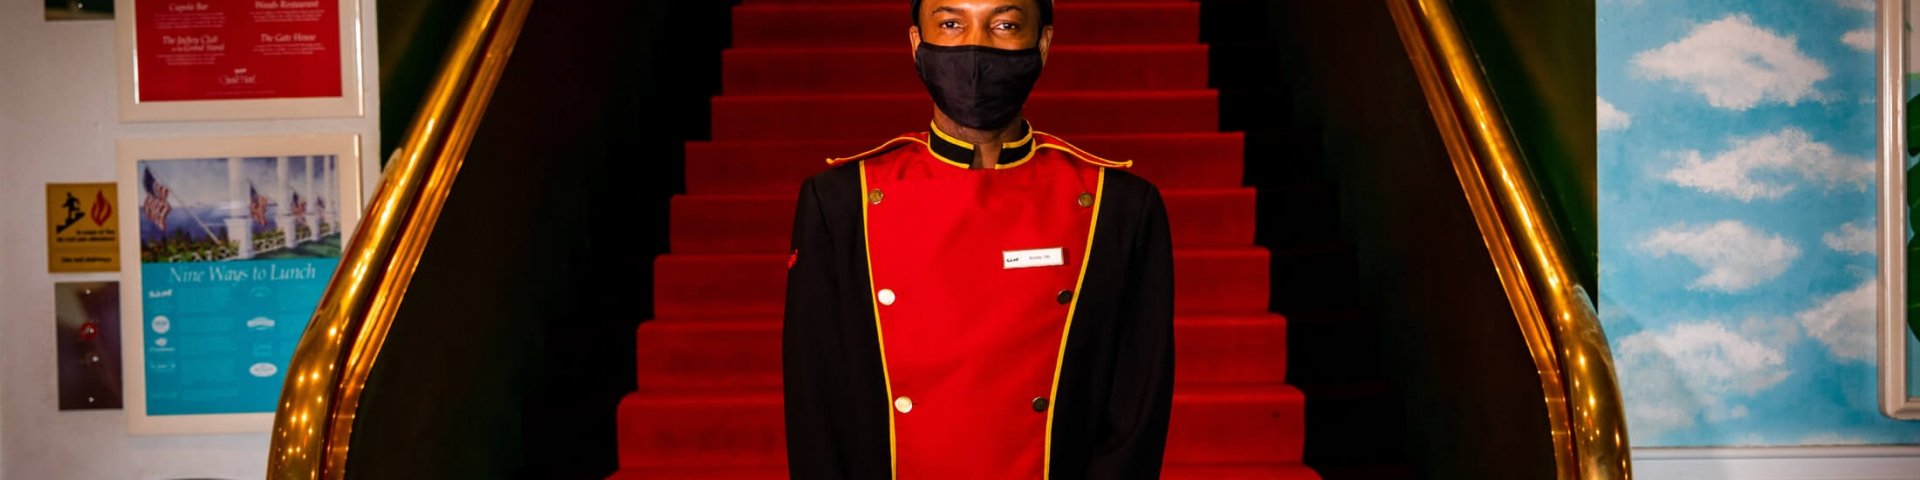 A staff member wearing a mask